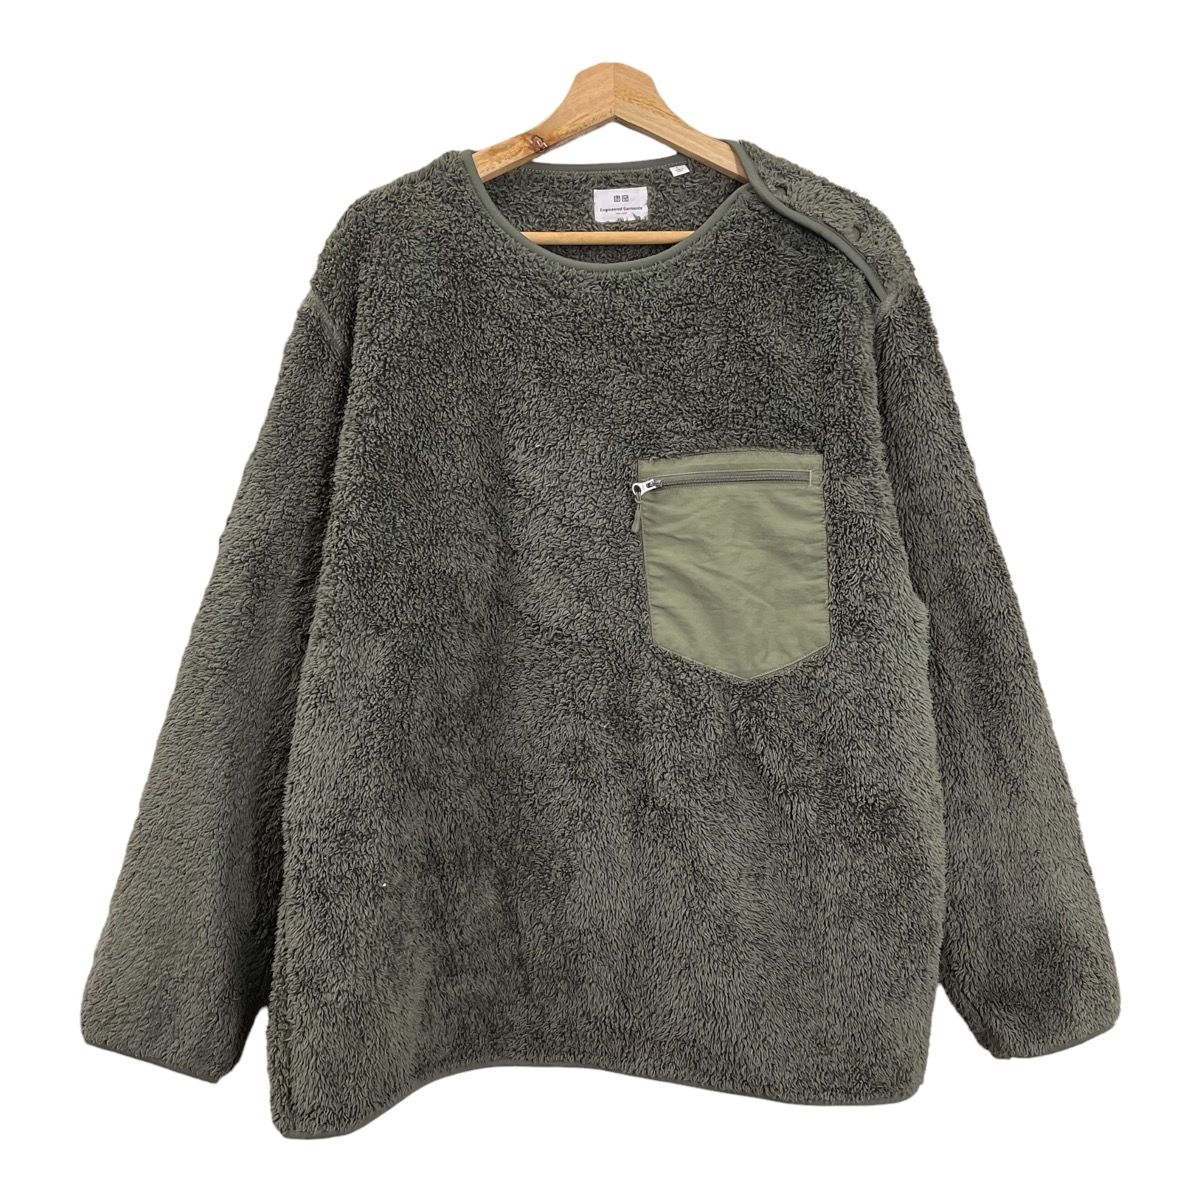 Uniqlo Engineered Garments Pullover Fleece Size L - 1